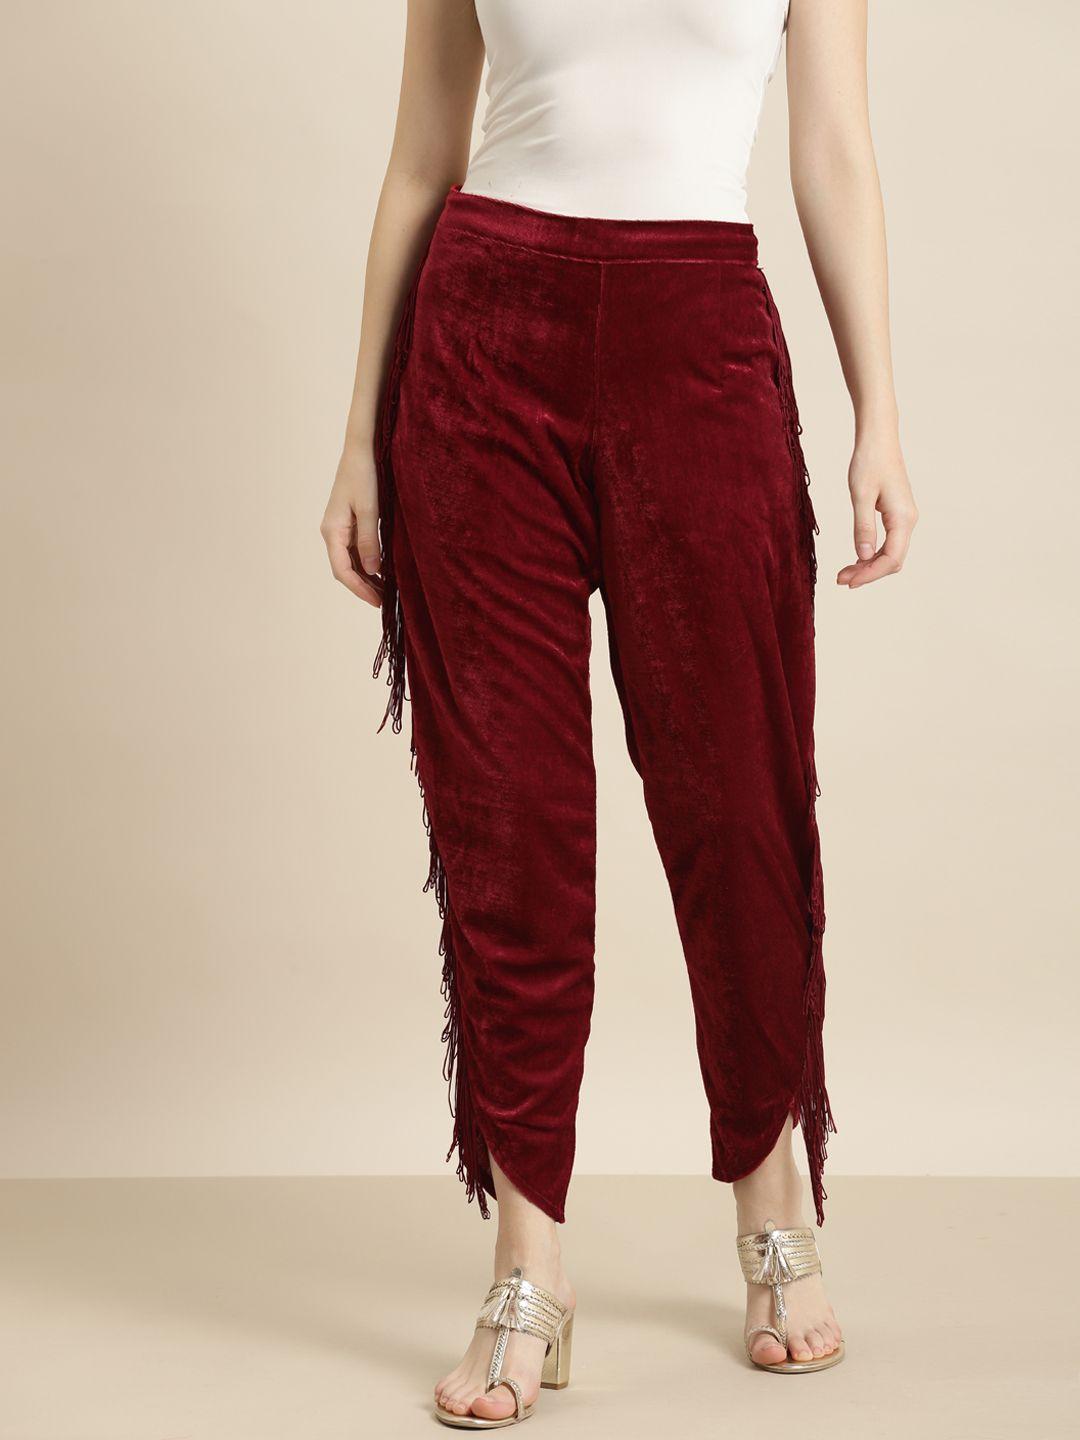 shae by sassafras women maroon trousers